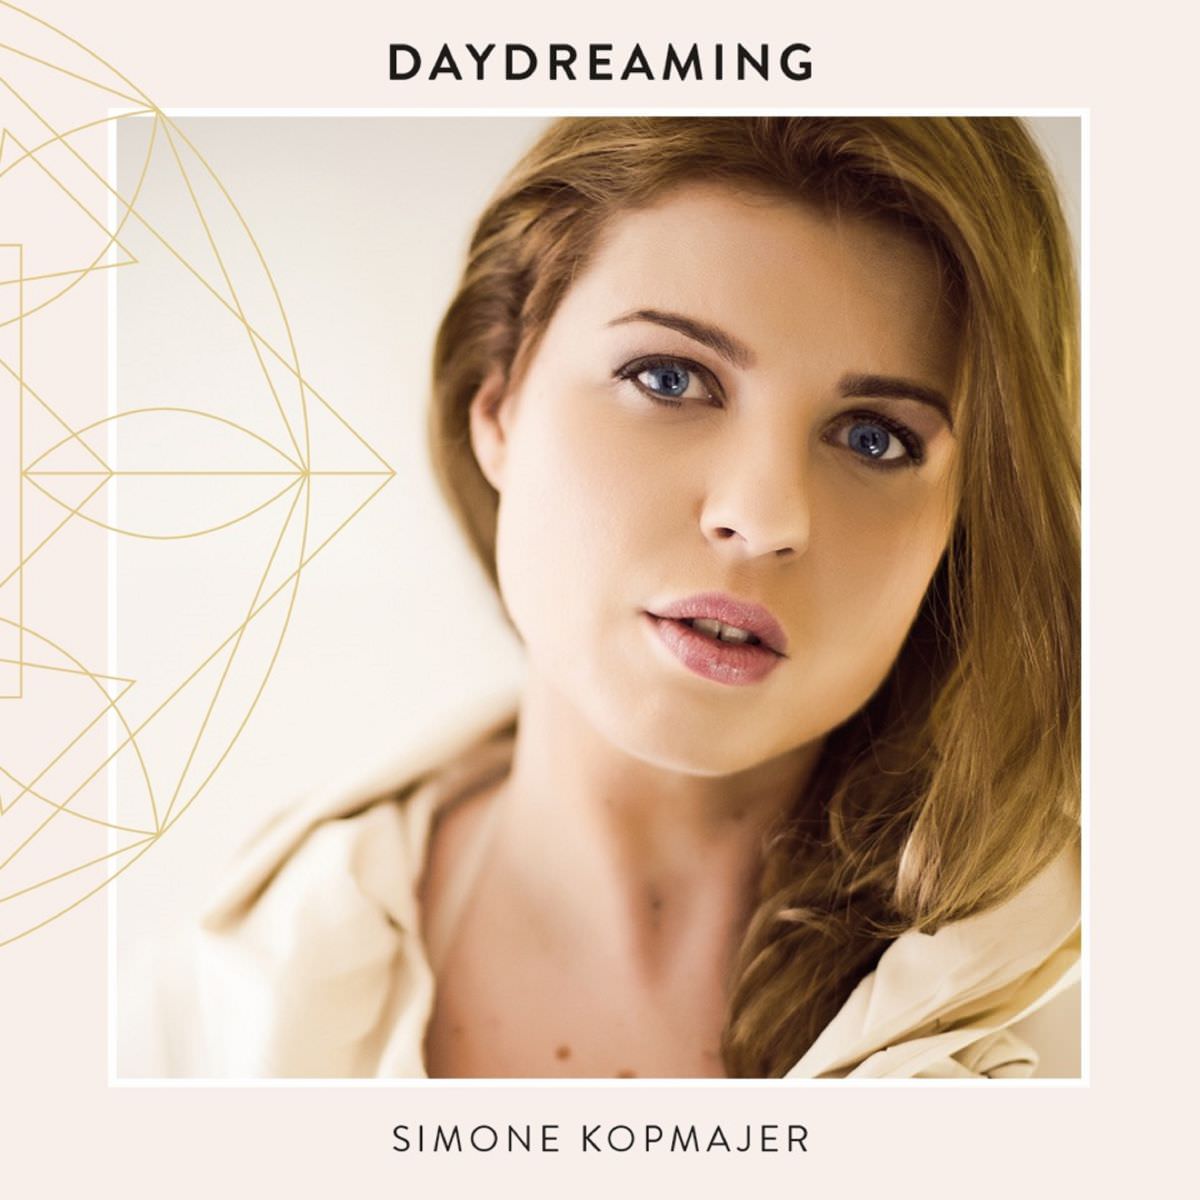 Simone Kopmajer – Daydreaming (2017) [HDTracks FLAC 24bit/192kHz]